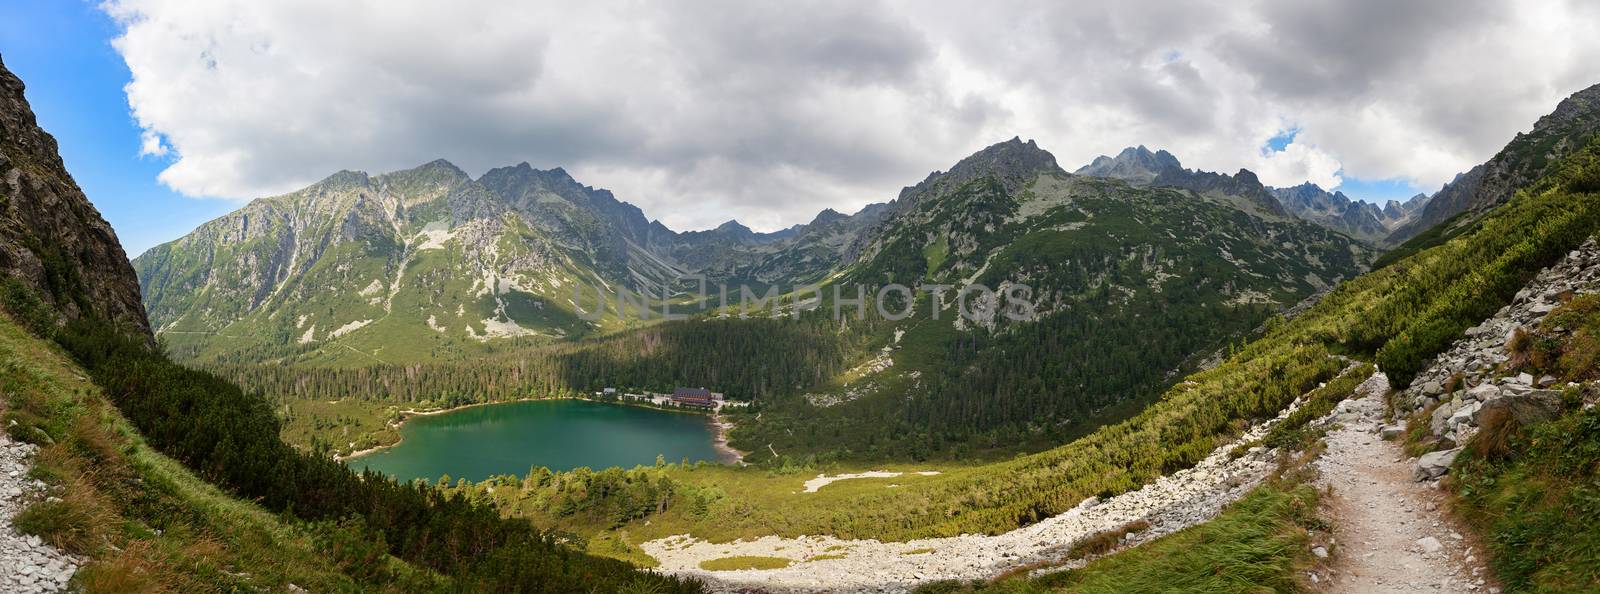 Panorama of Popradske pleso lake valley in High Tatra Mountains, Slovakia, Europe by igor_stramyk